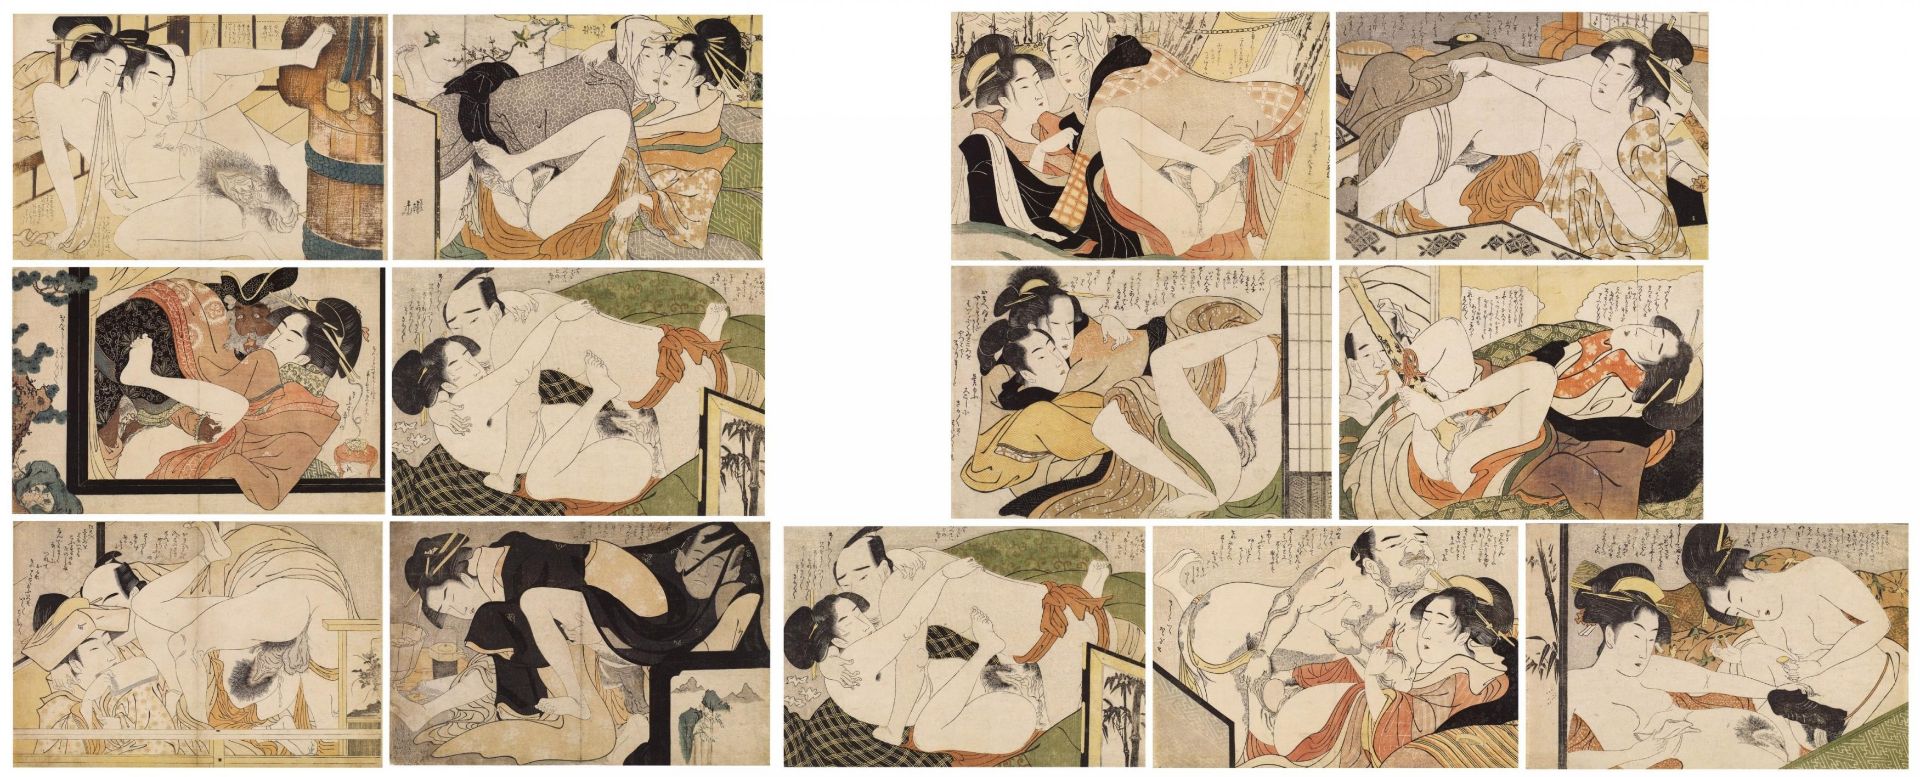 13 Blätter der Shunga-Serie "Fumi no kiyogaki"